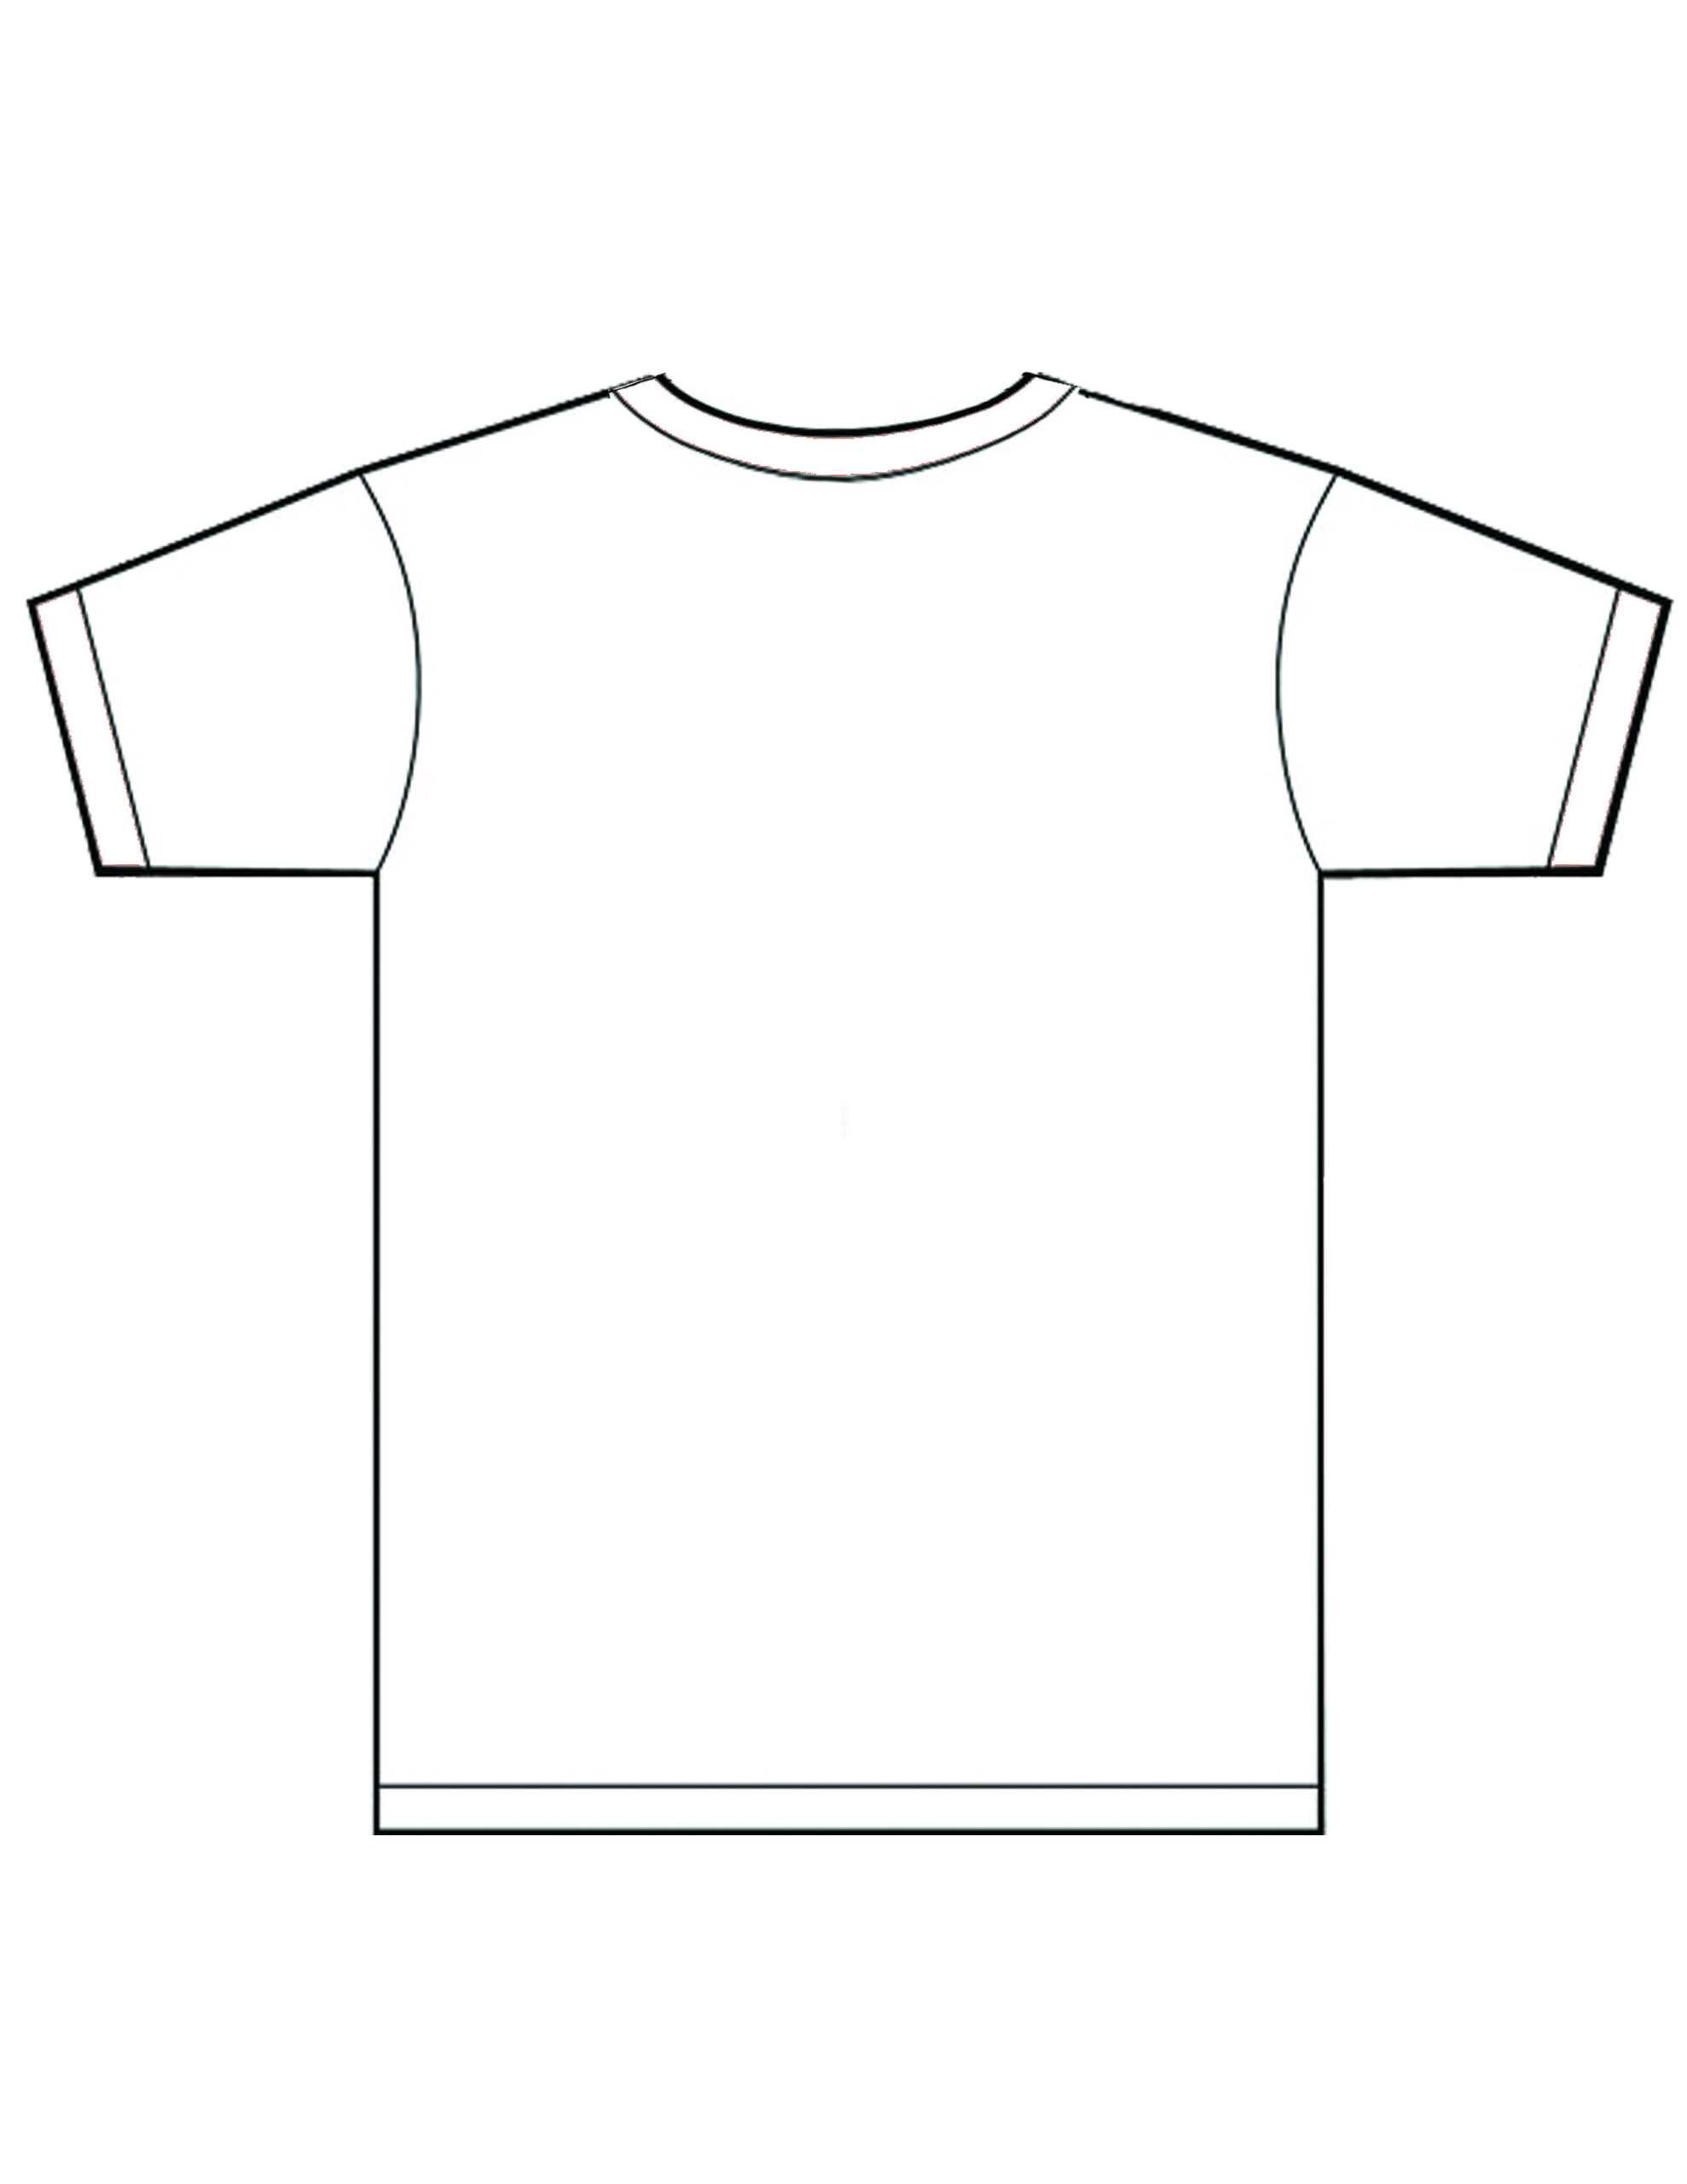 Blank T Shirts Template Photoshop | Rldm Within Blank Tee Shirt Template